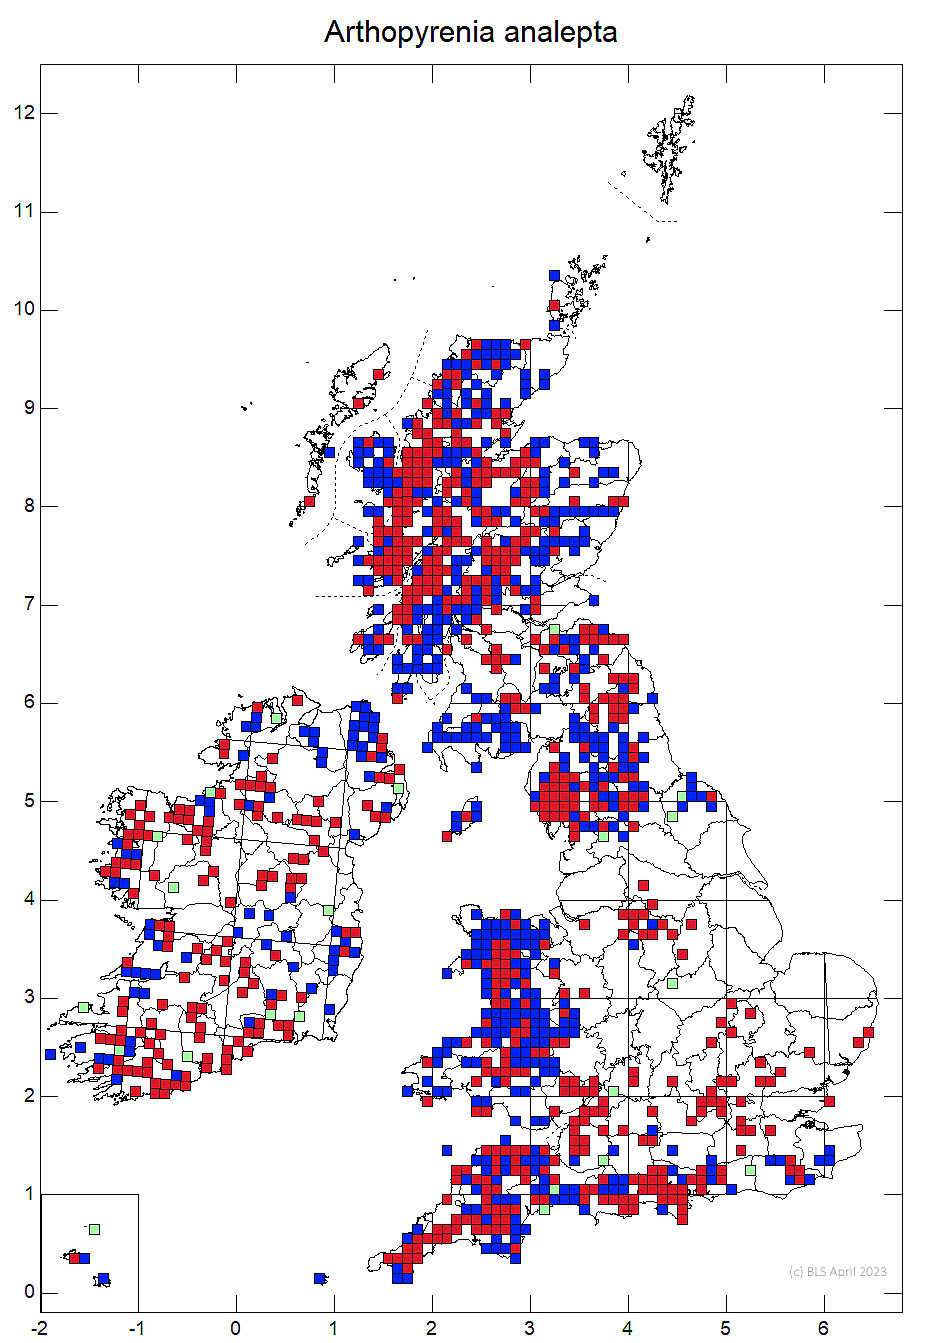 Arthopyrenia analepta 10km sq distribution map